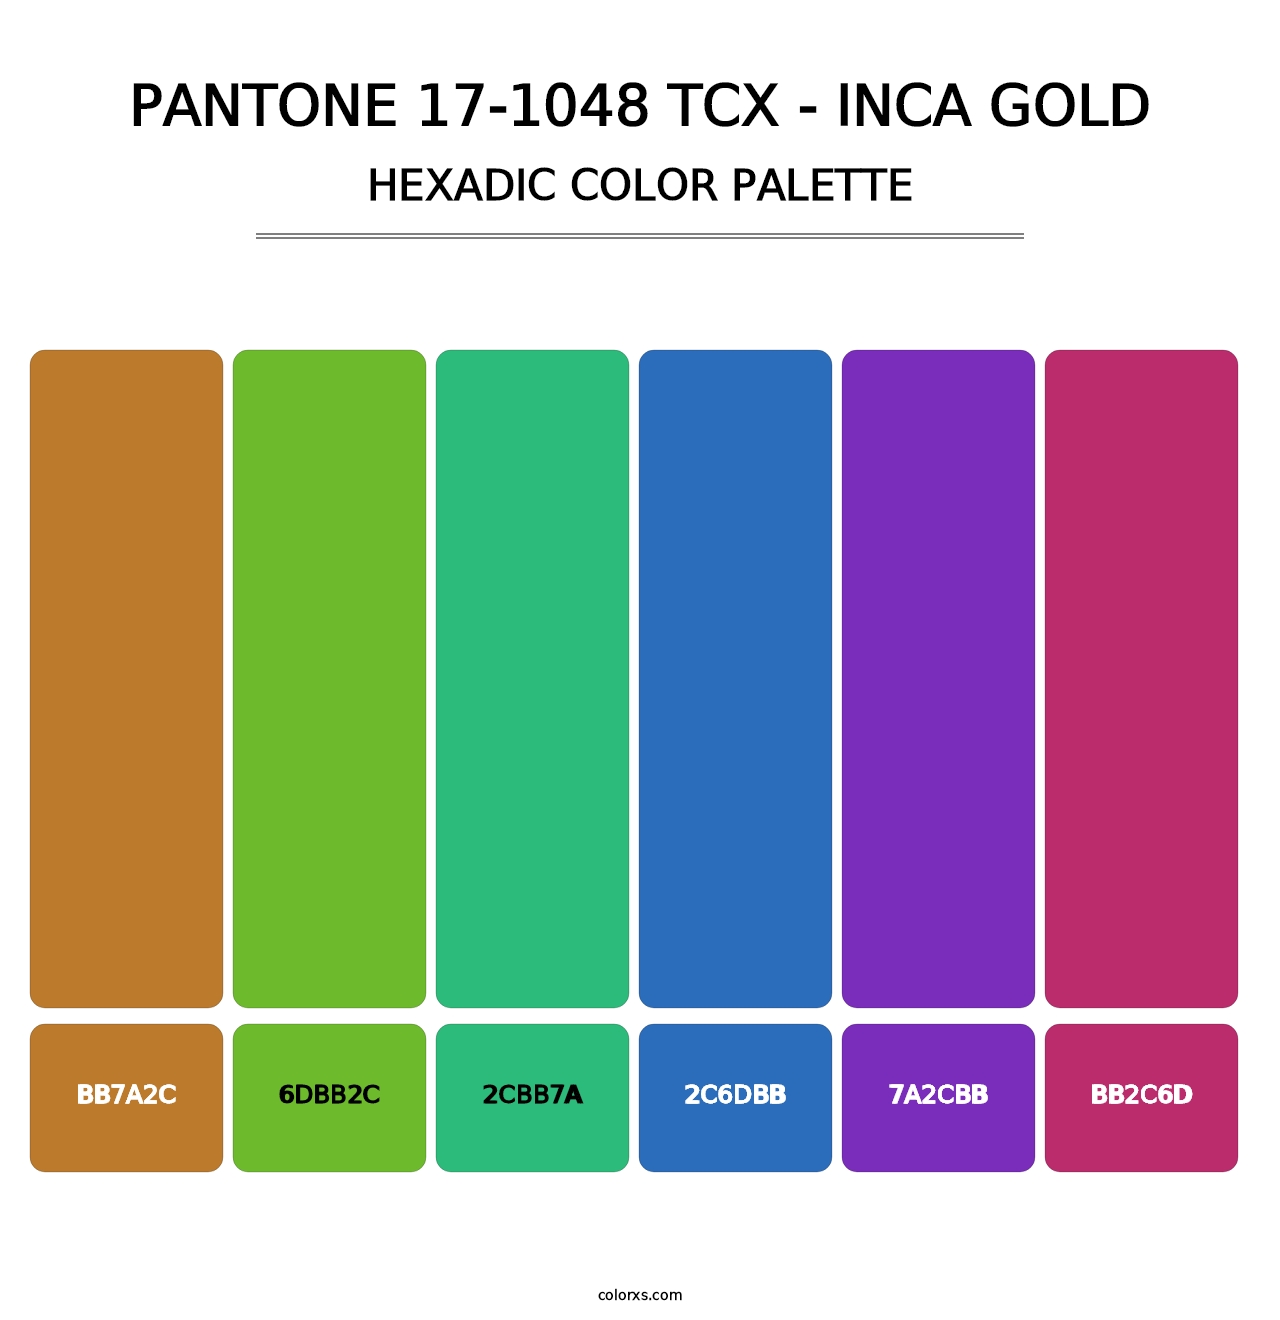 PANTONE 17-1048 TCX - Inca Gold - Hexadic Color Palette